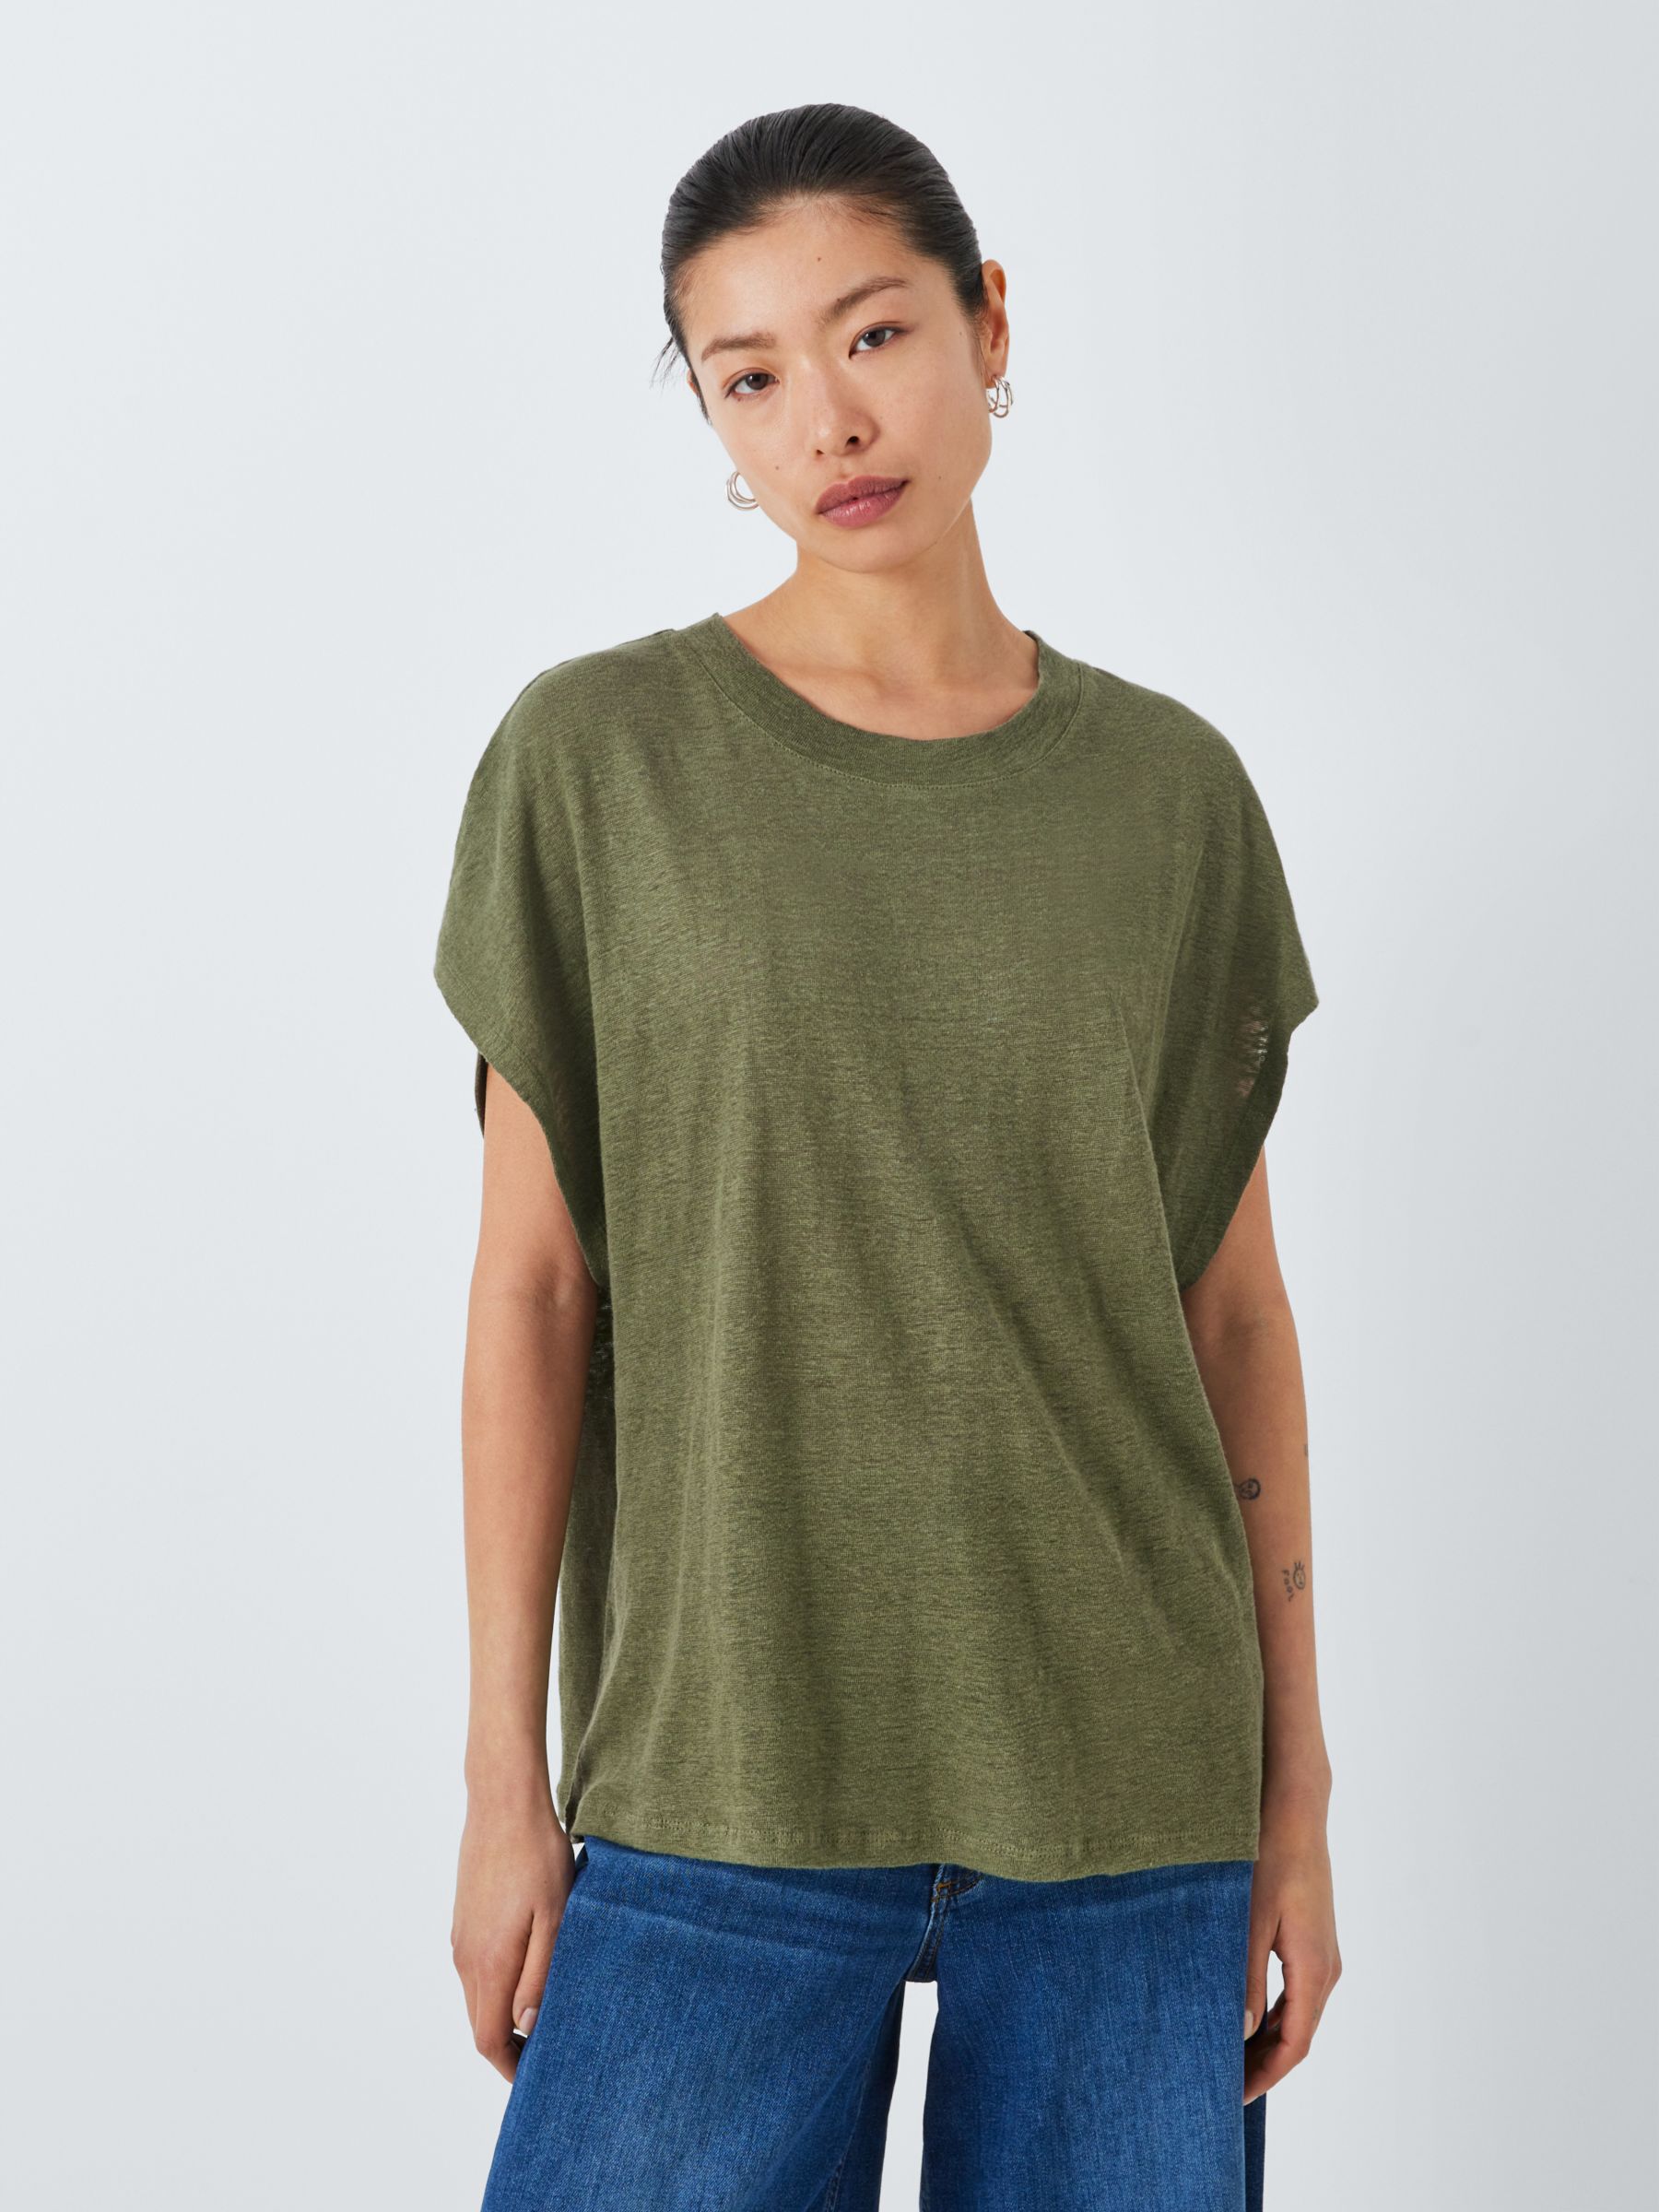 AND/OR Della Linen T-Shirt, Khaki, 18